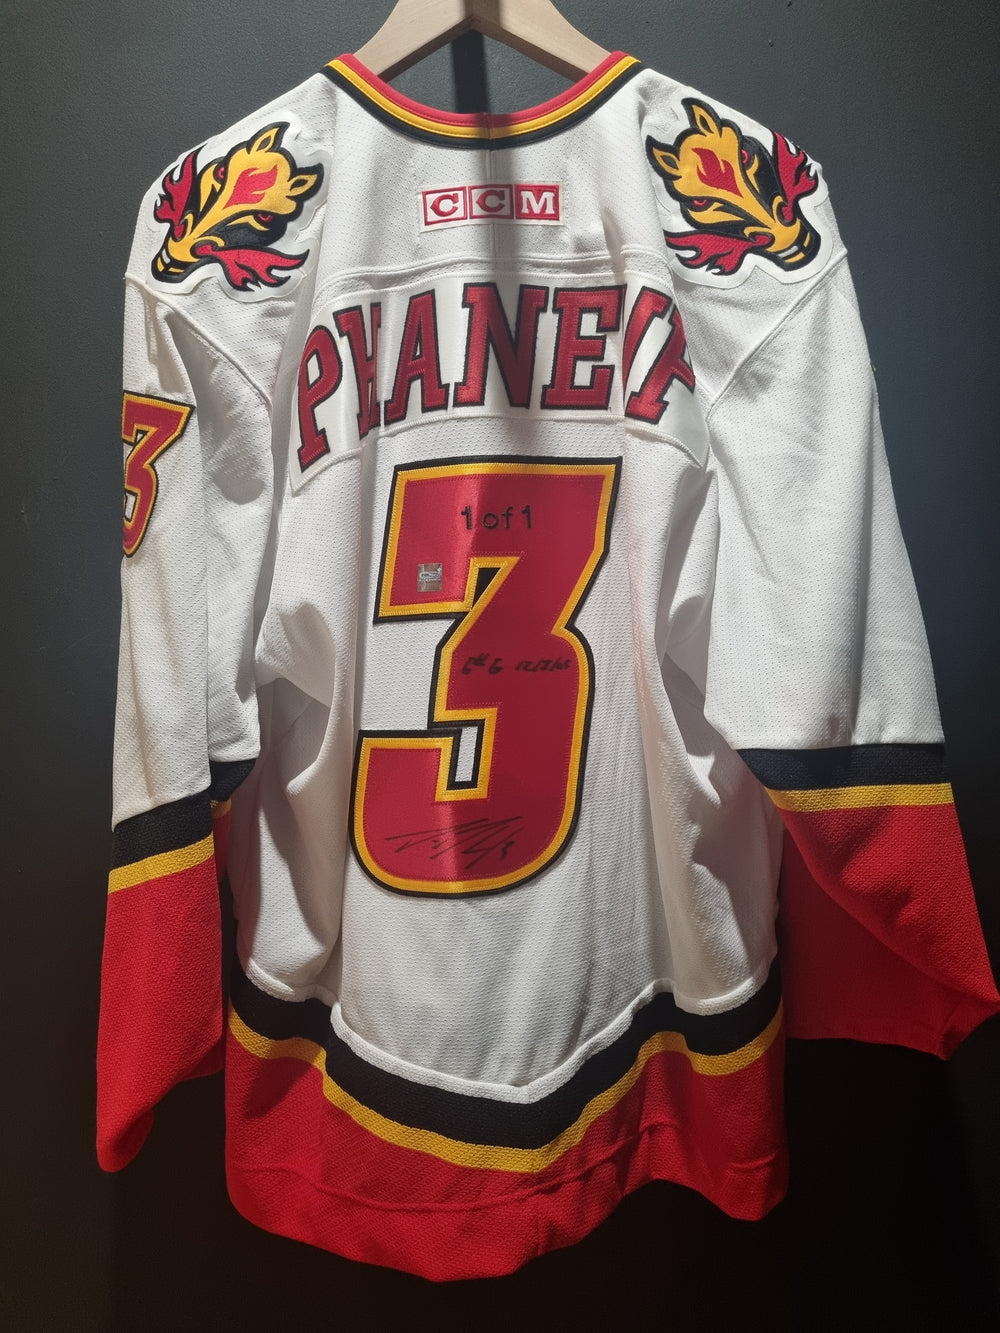 Signed Authenticated Phaneuf Calgary Flames Large